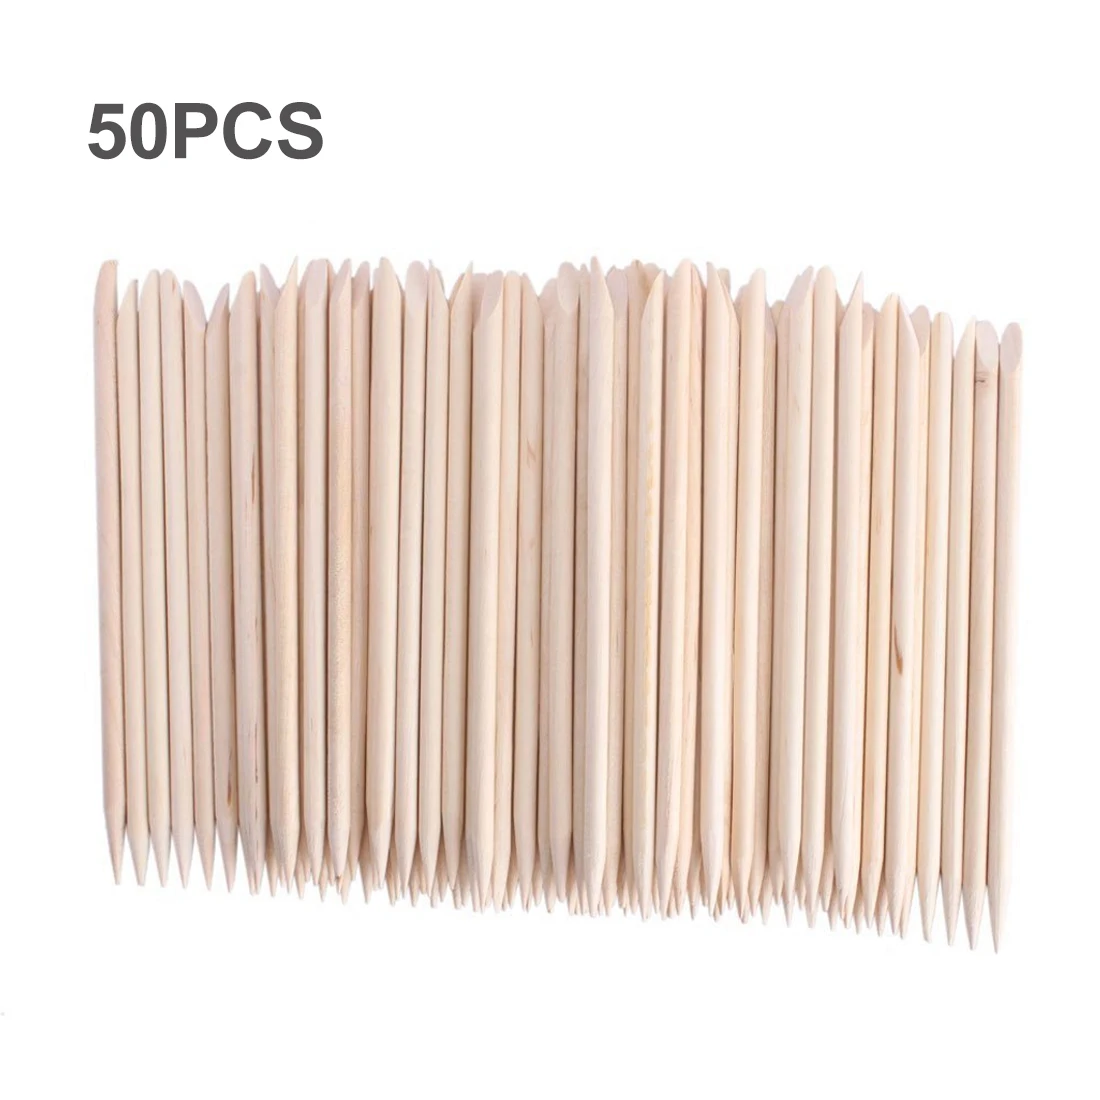 Новинка; 1/50 шт деревянная палочка для кутикулы ногтей для удаления кутикулы деревянные палочки для удаления кутикулы ногтей Маникюр нейл-арта - Цвет: 50PCS